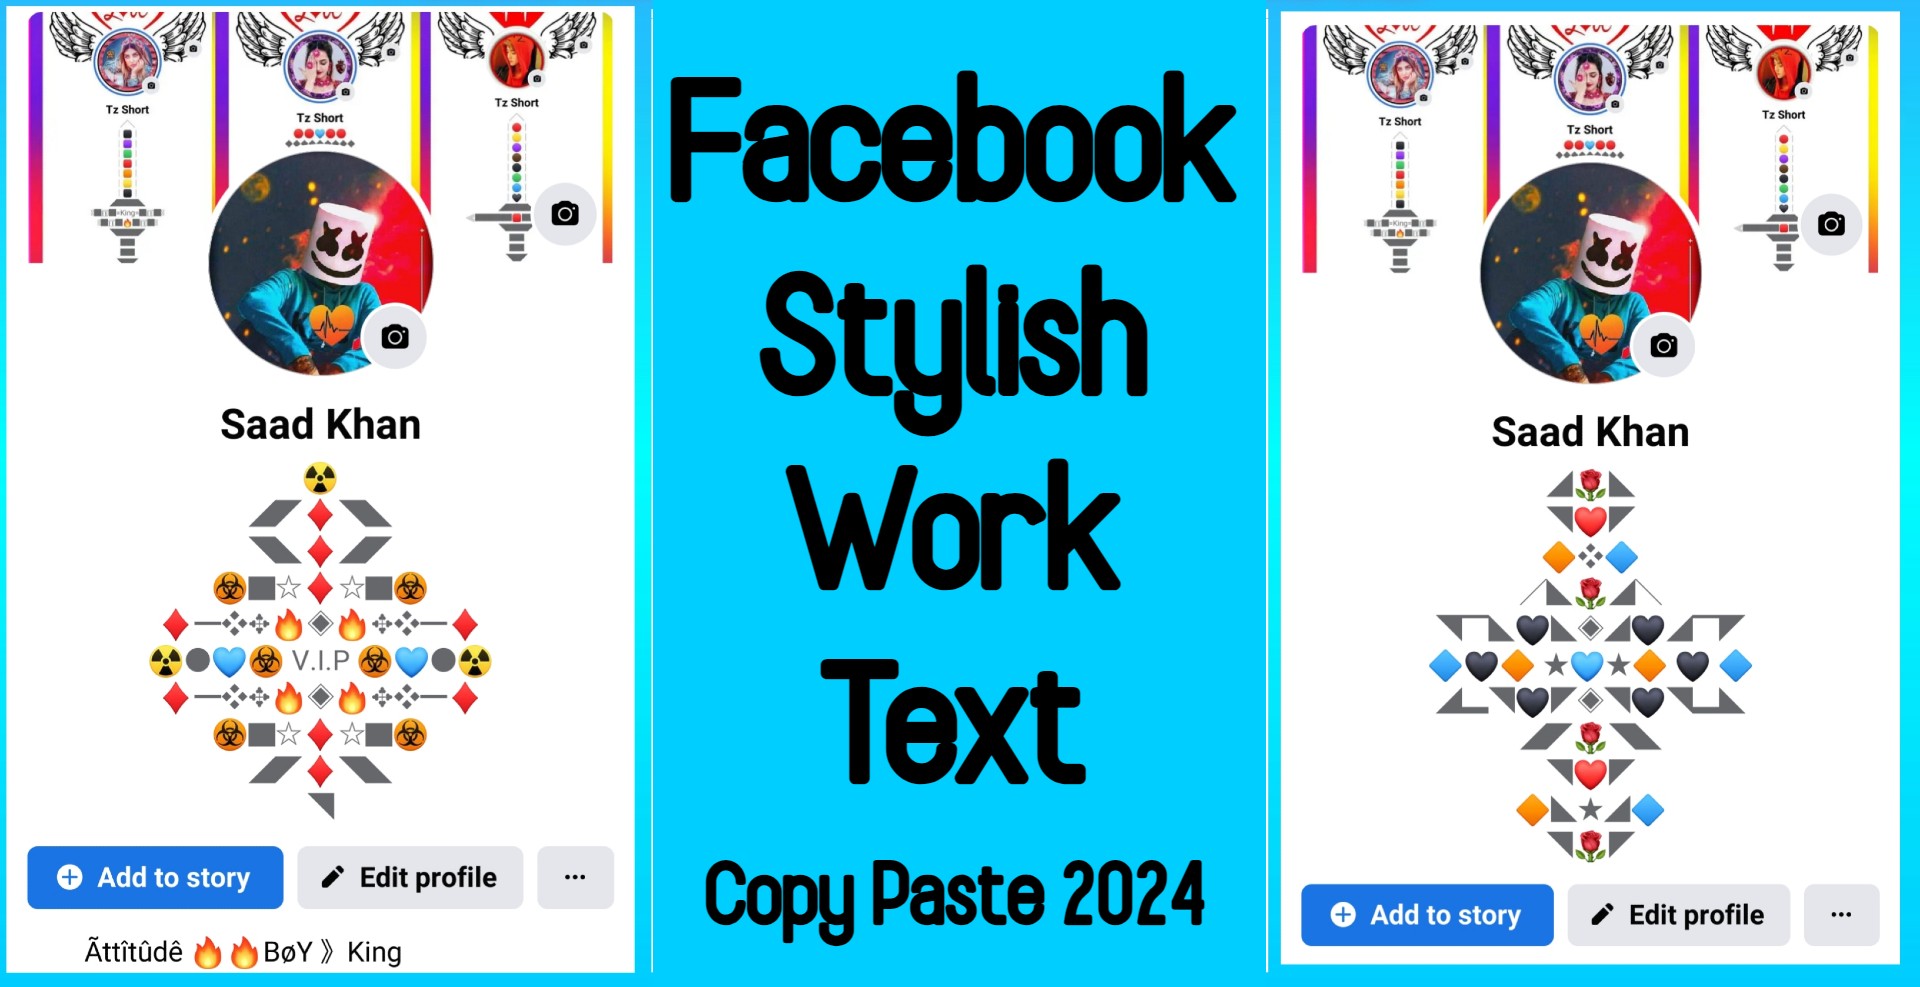 Facebook Stylish Work Text